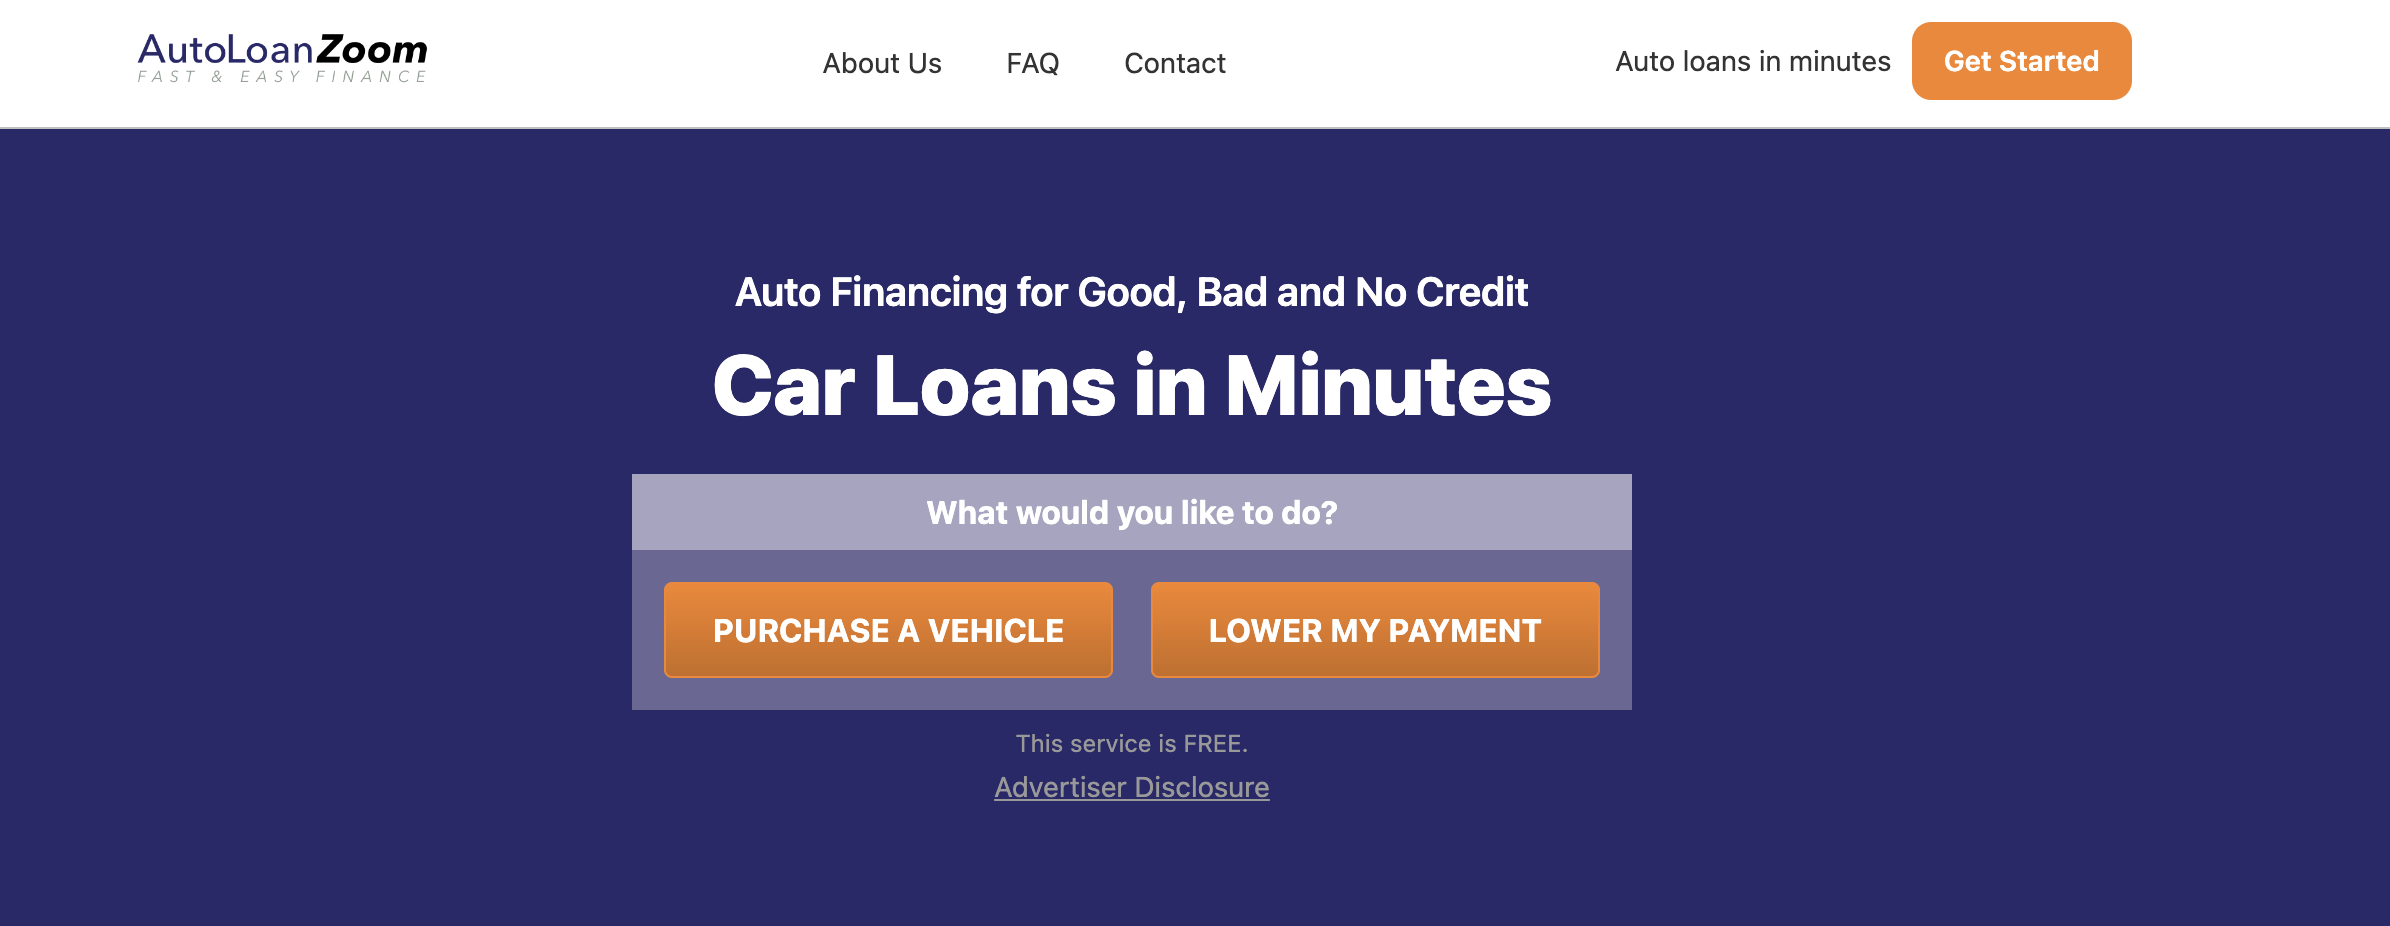 Auto Loan Zoom